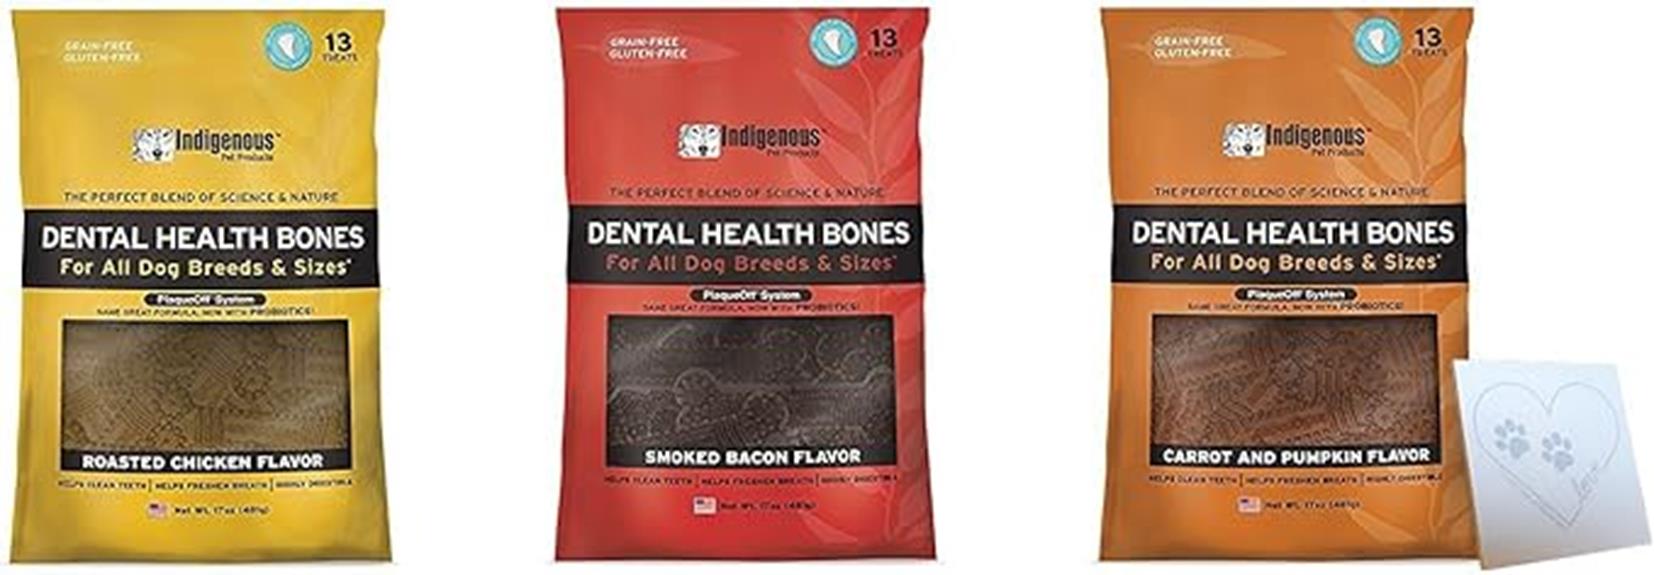 indigenous dental health bones